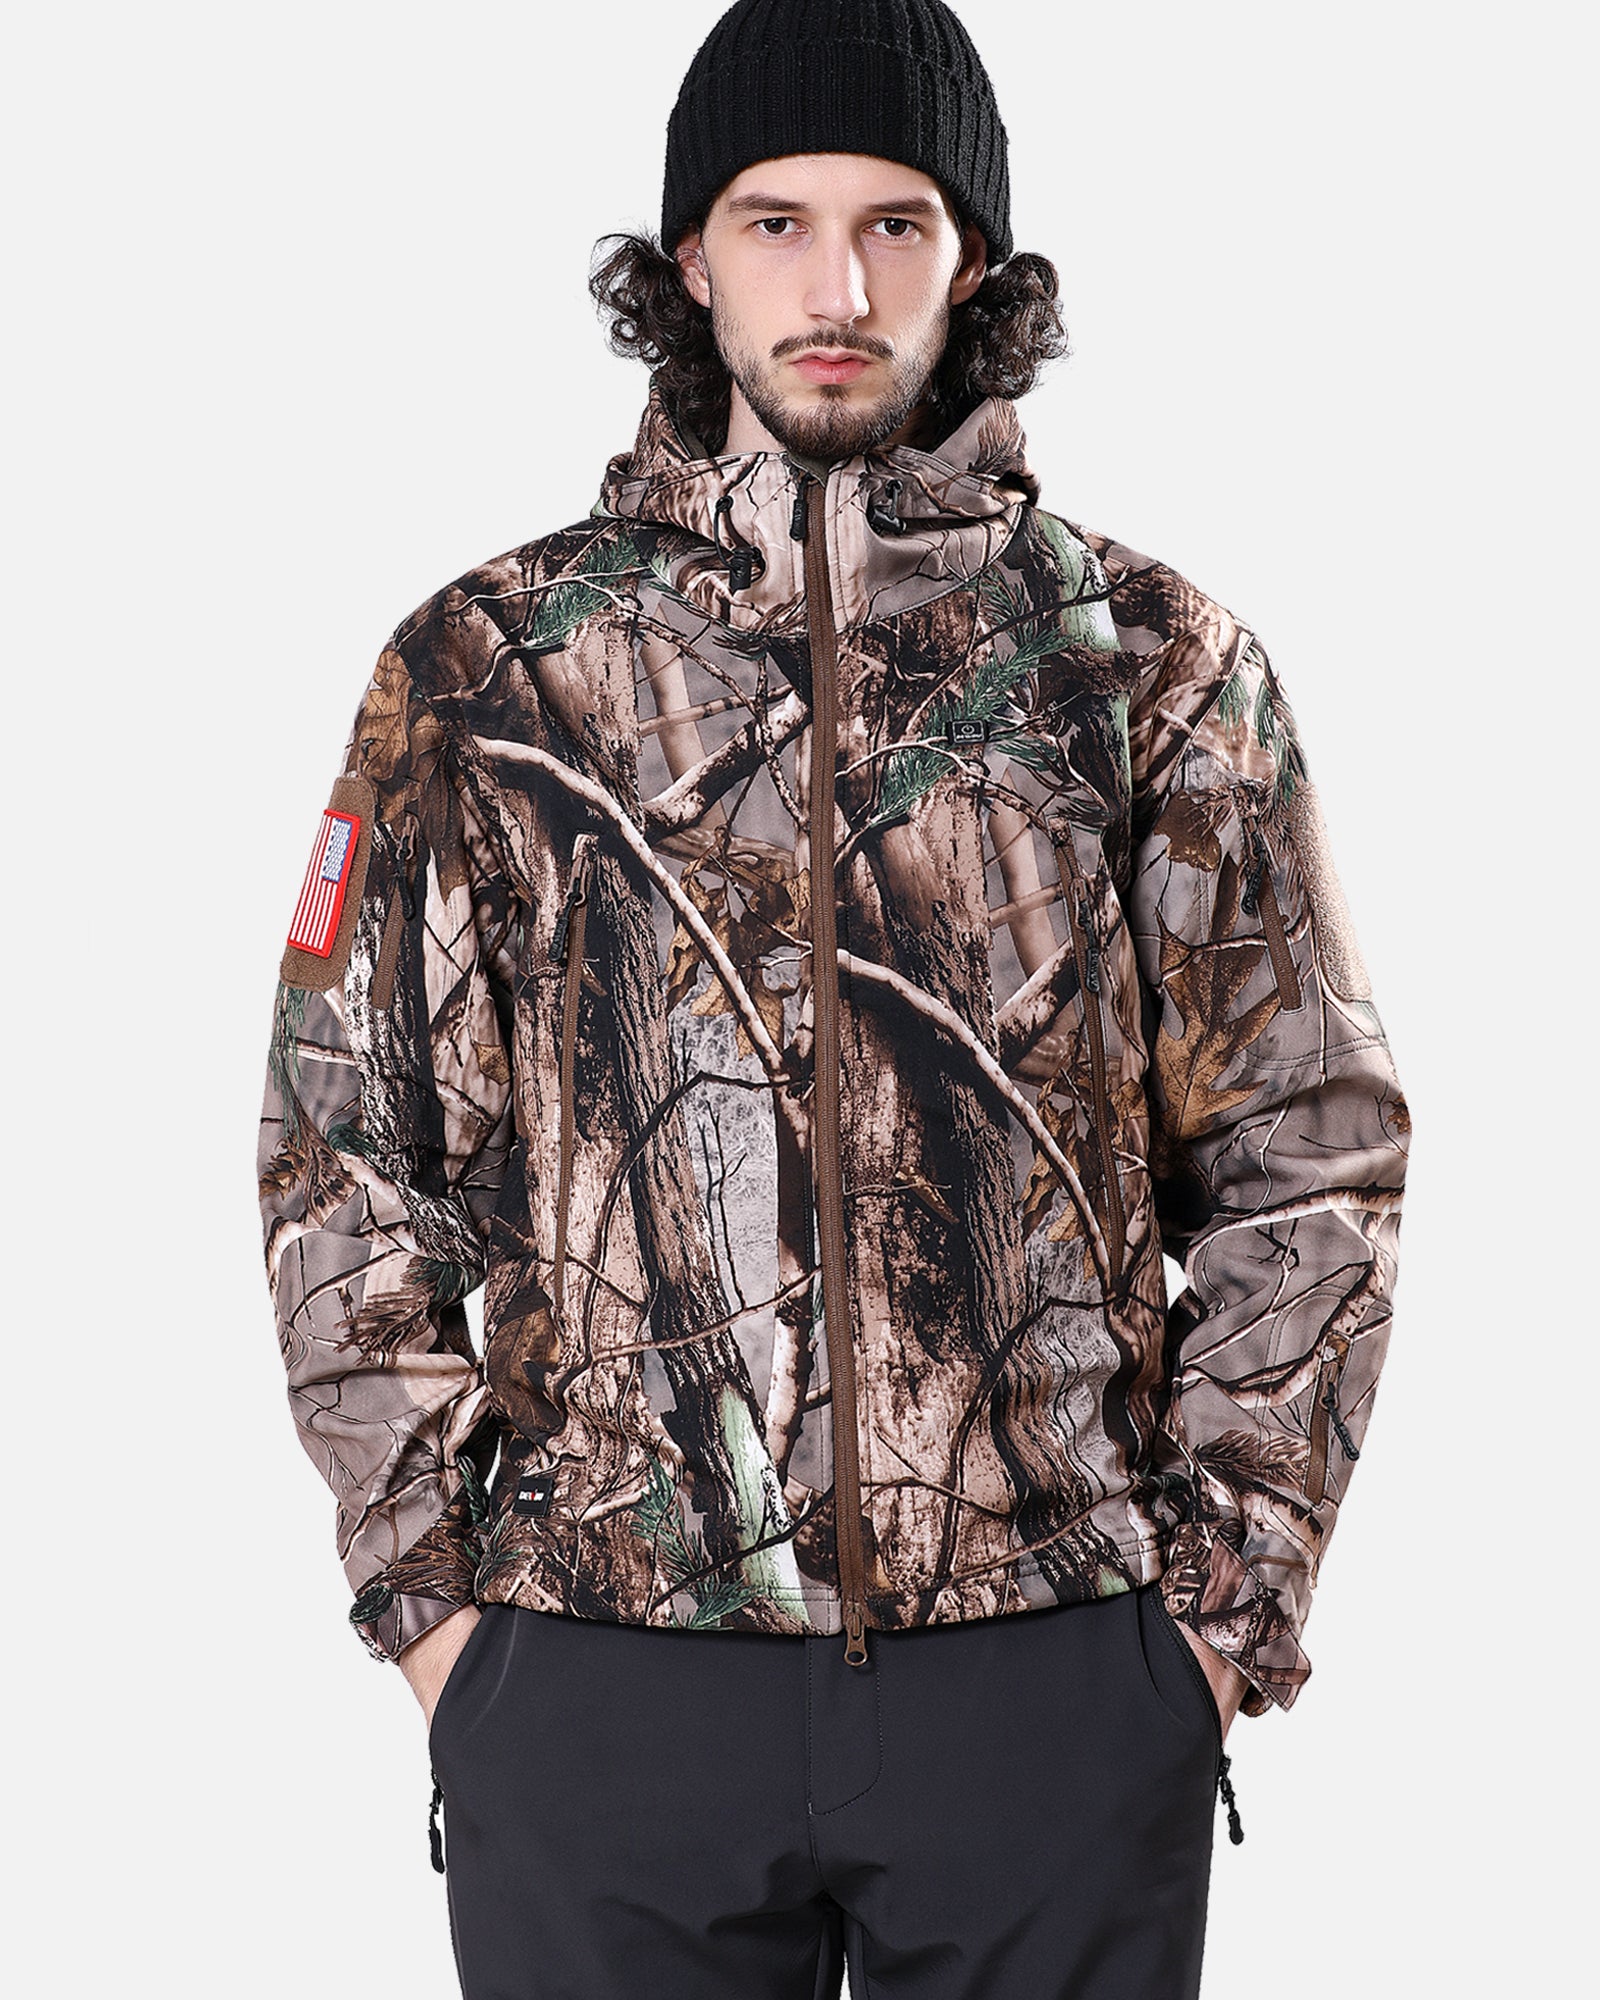 DEWBU® Men's Soft Shell Heated Jacket With 12V Battery Pack - Tree